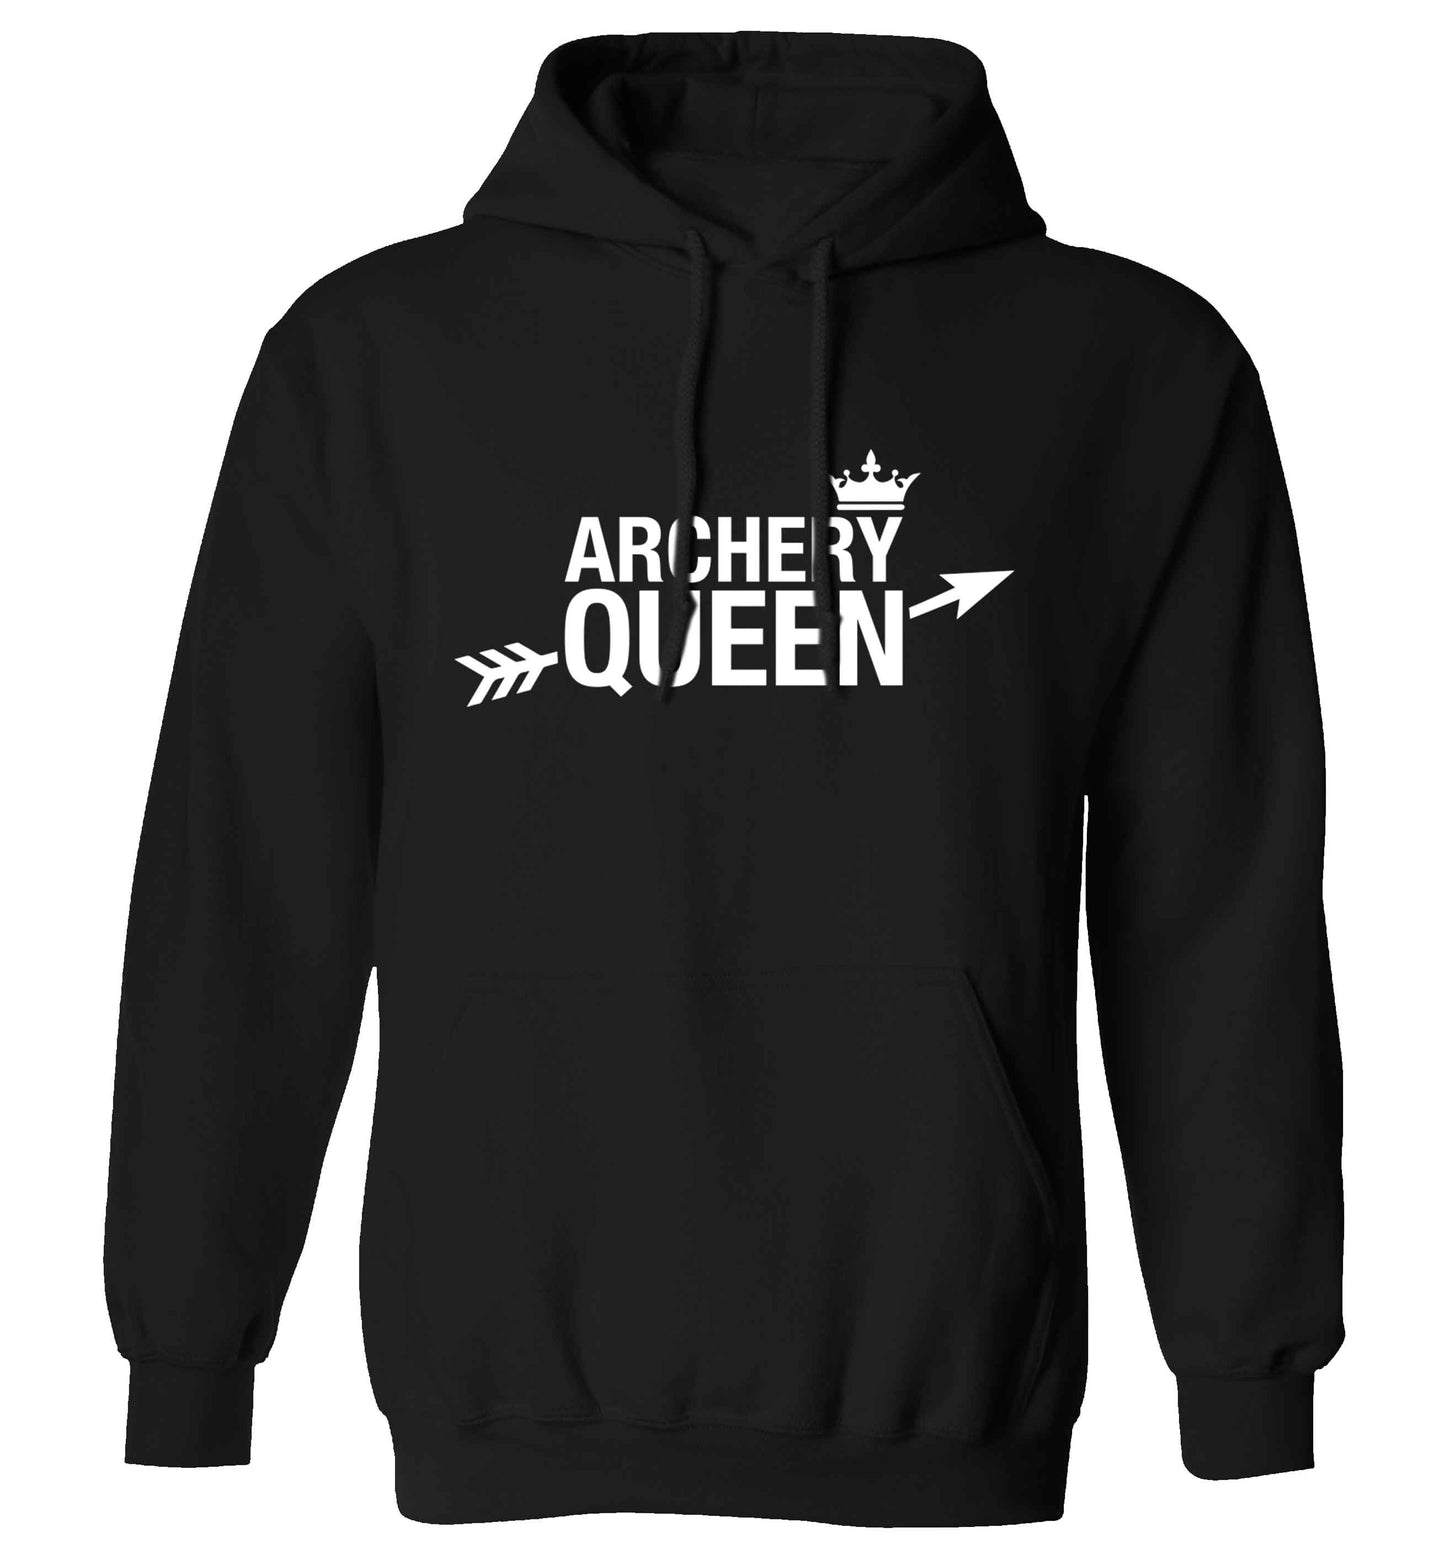 Archery queen adults unisex black hoodie 2XL